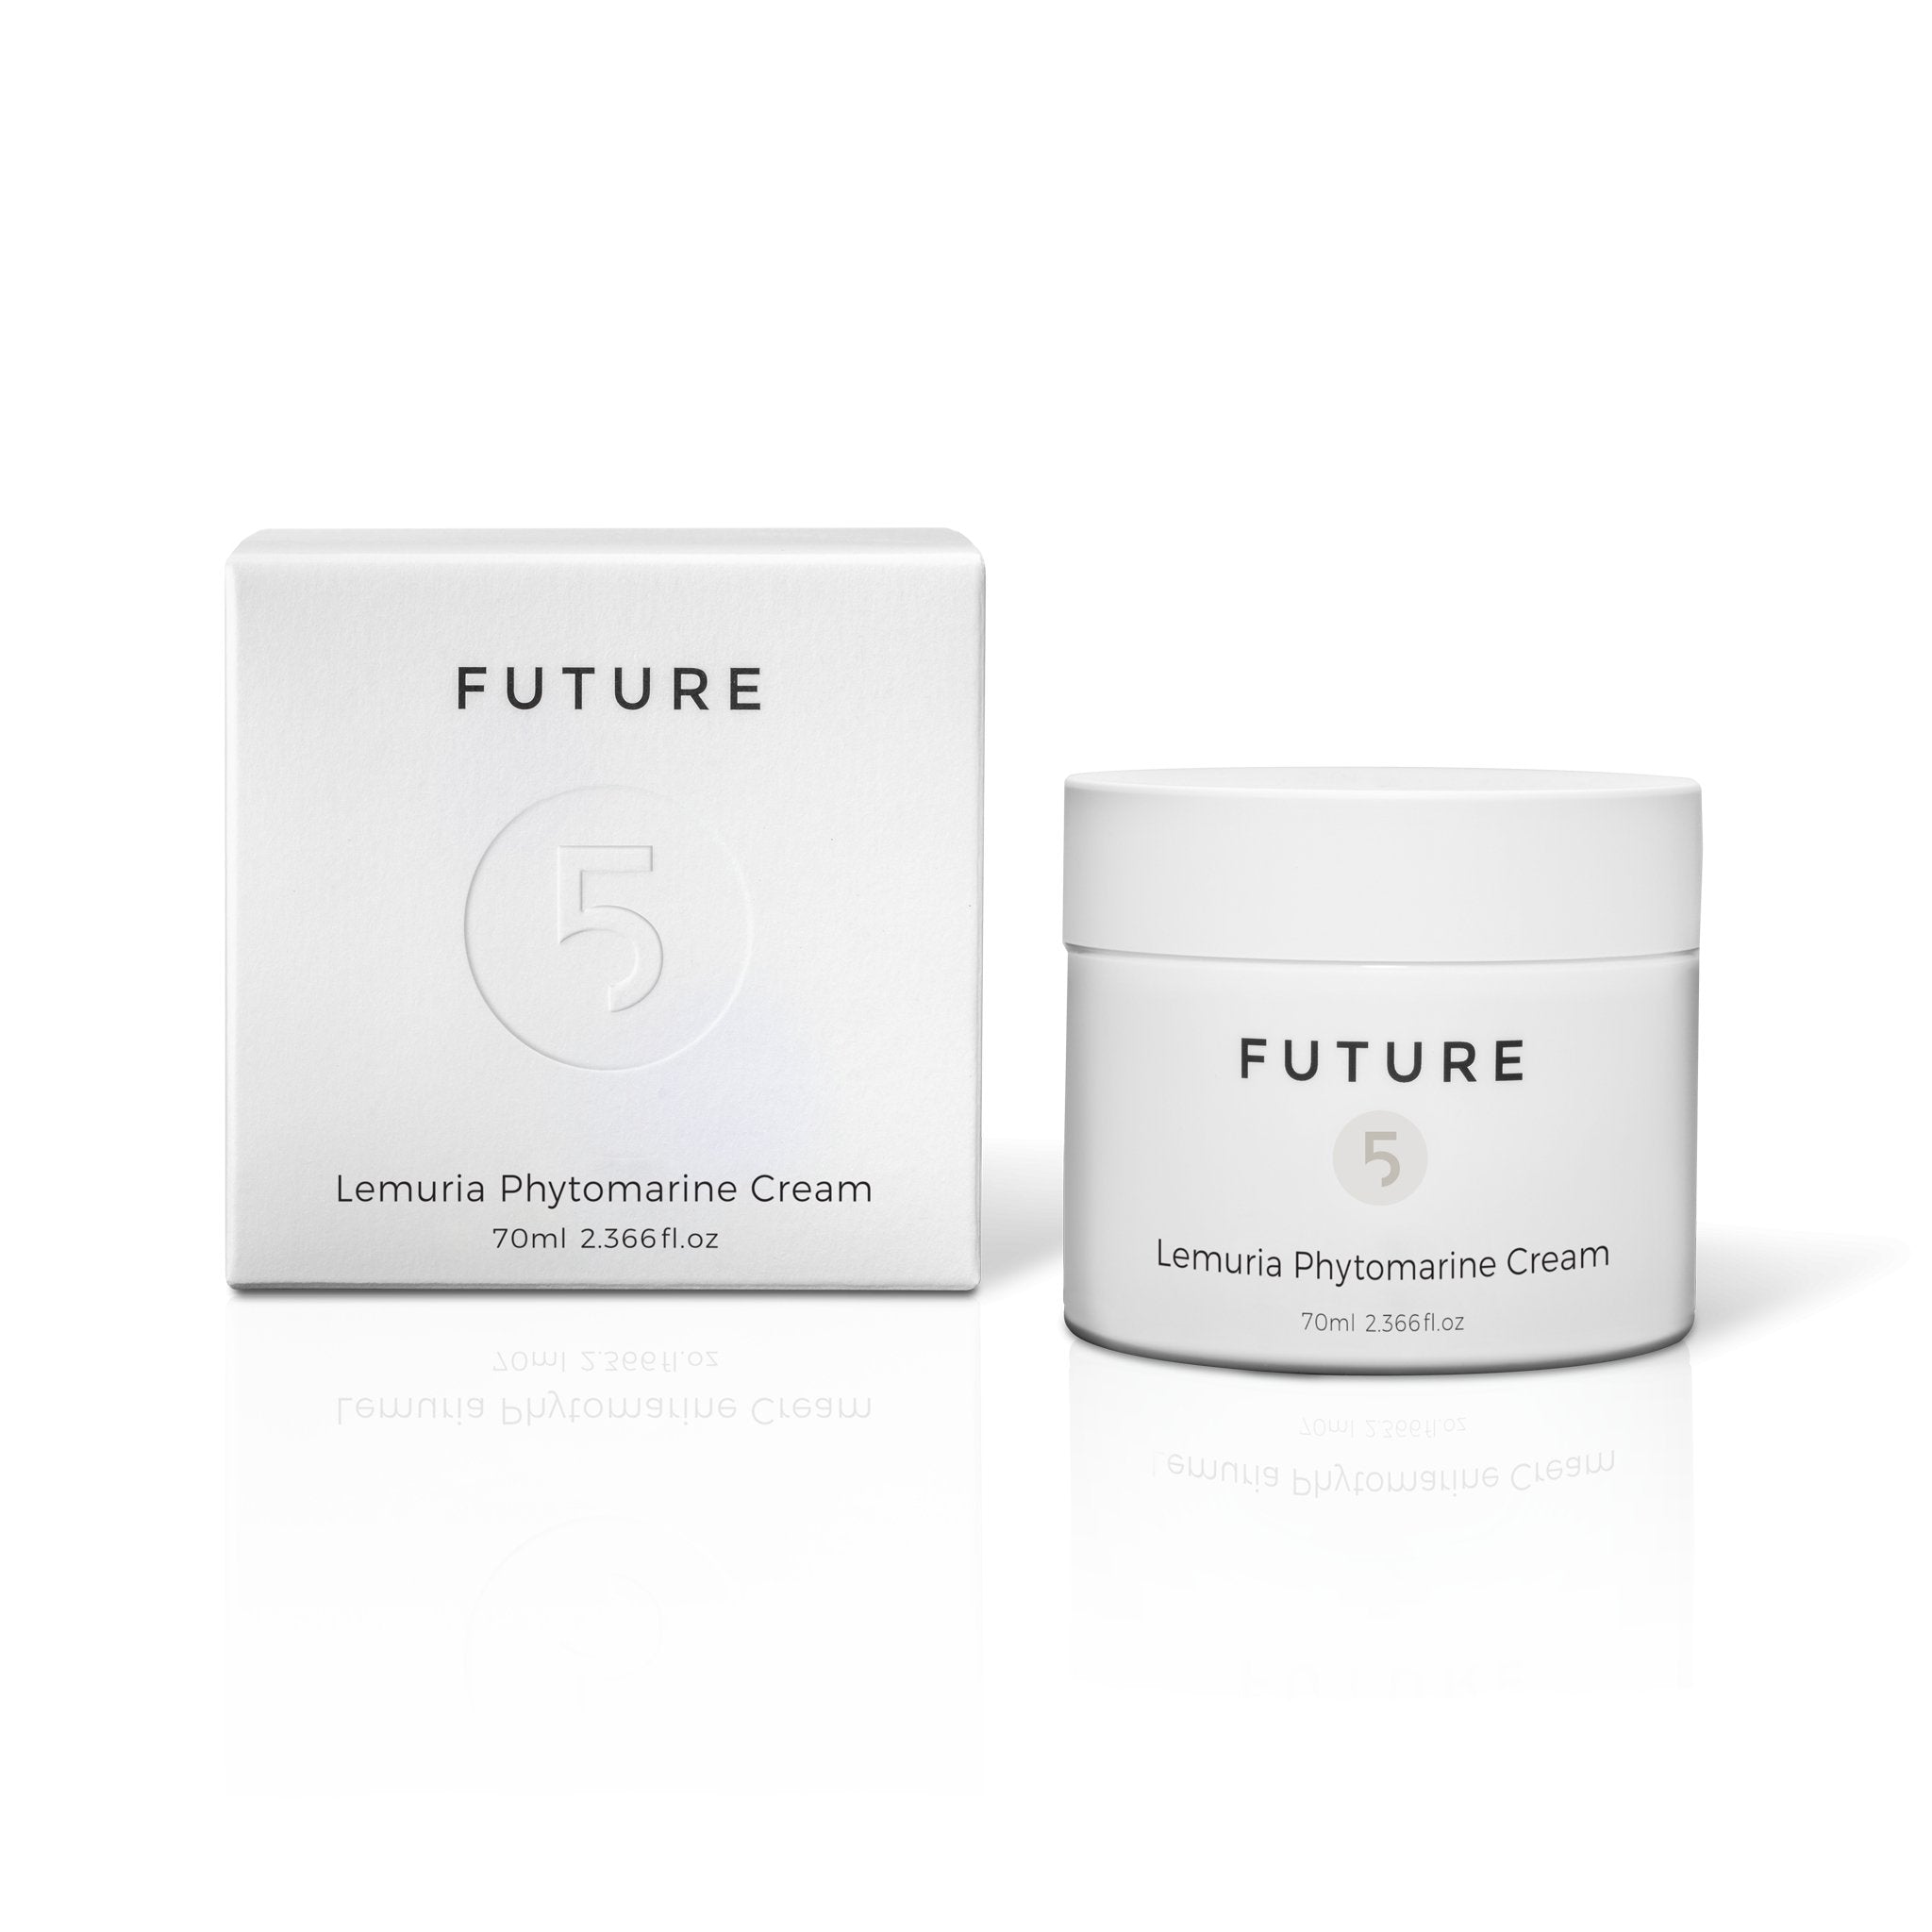 Lemuria Phytomarine Cream - Future Cosmetics The 5 Elements